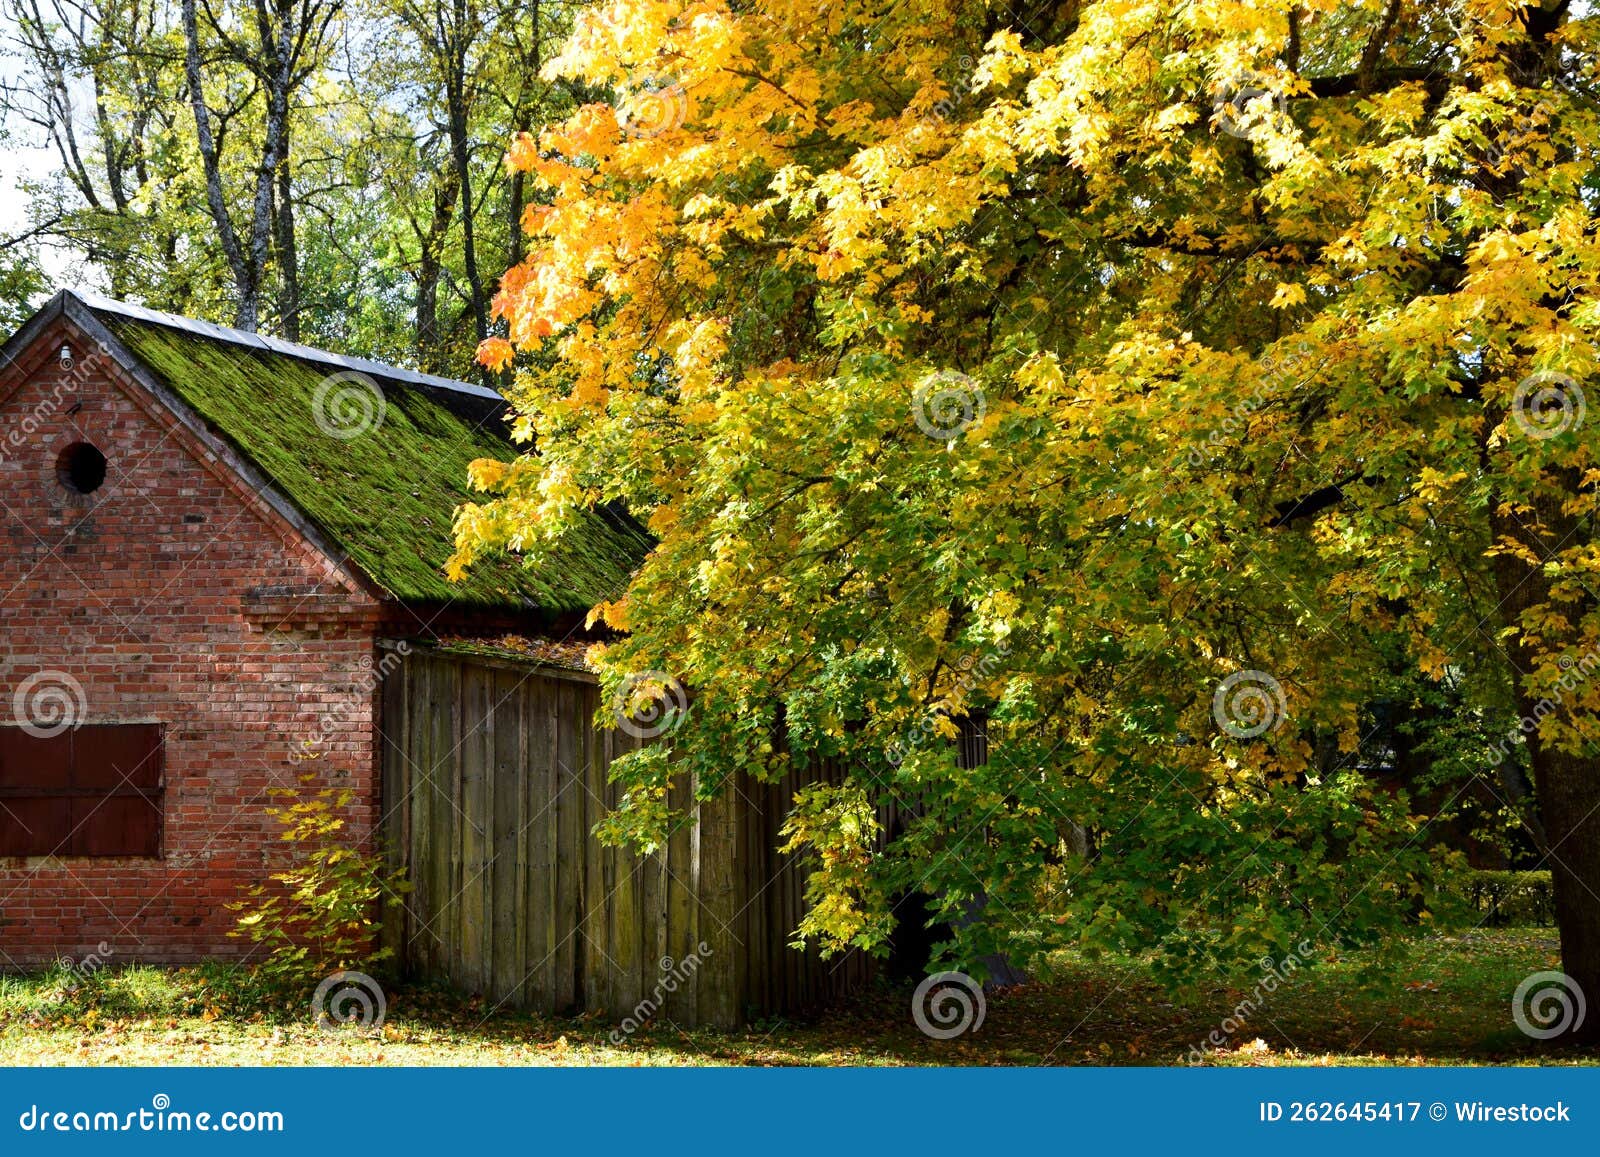 Beautiful Autumn in the Neighborhood Stock Image - Image of leaves ...